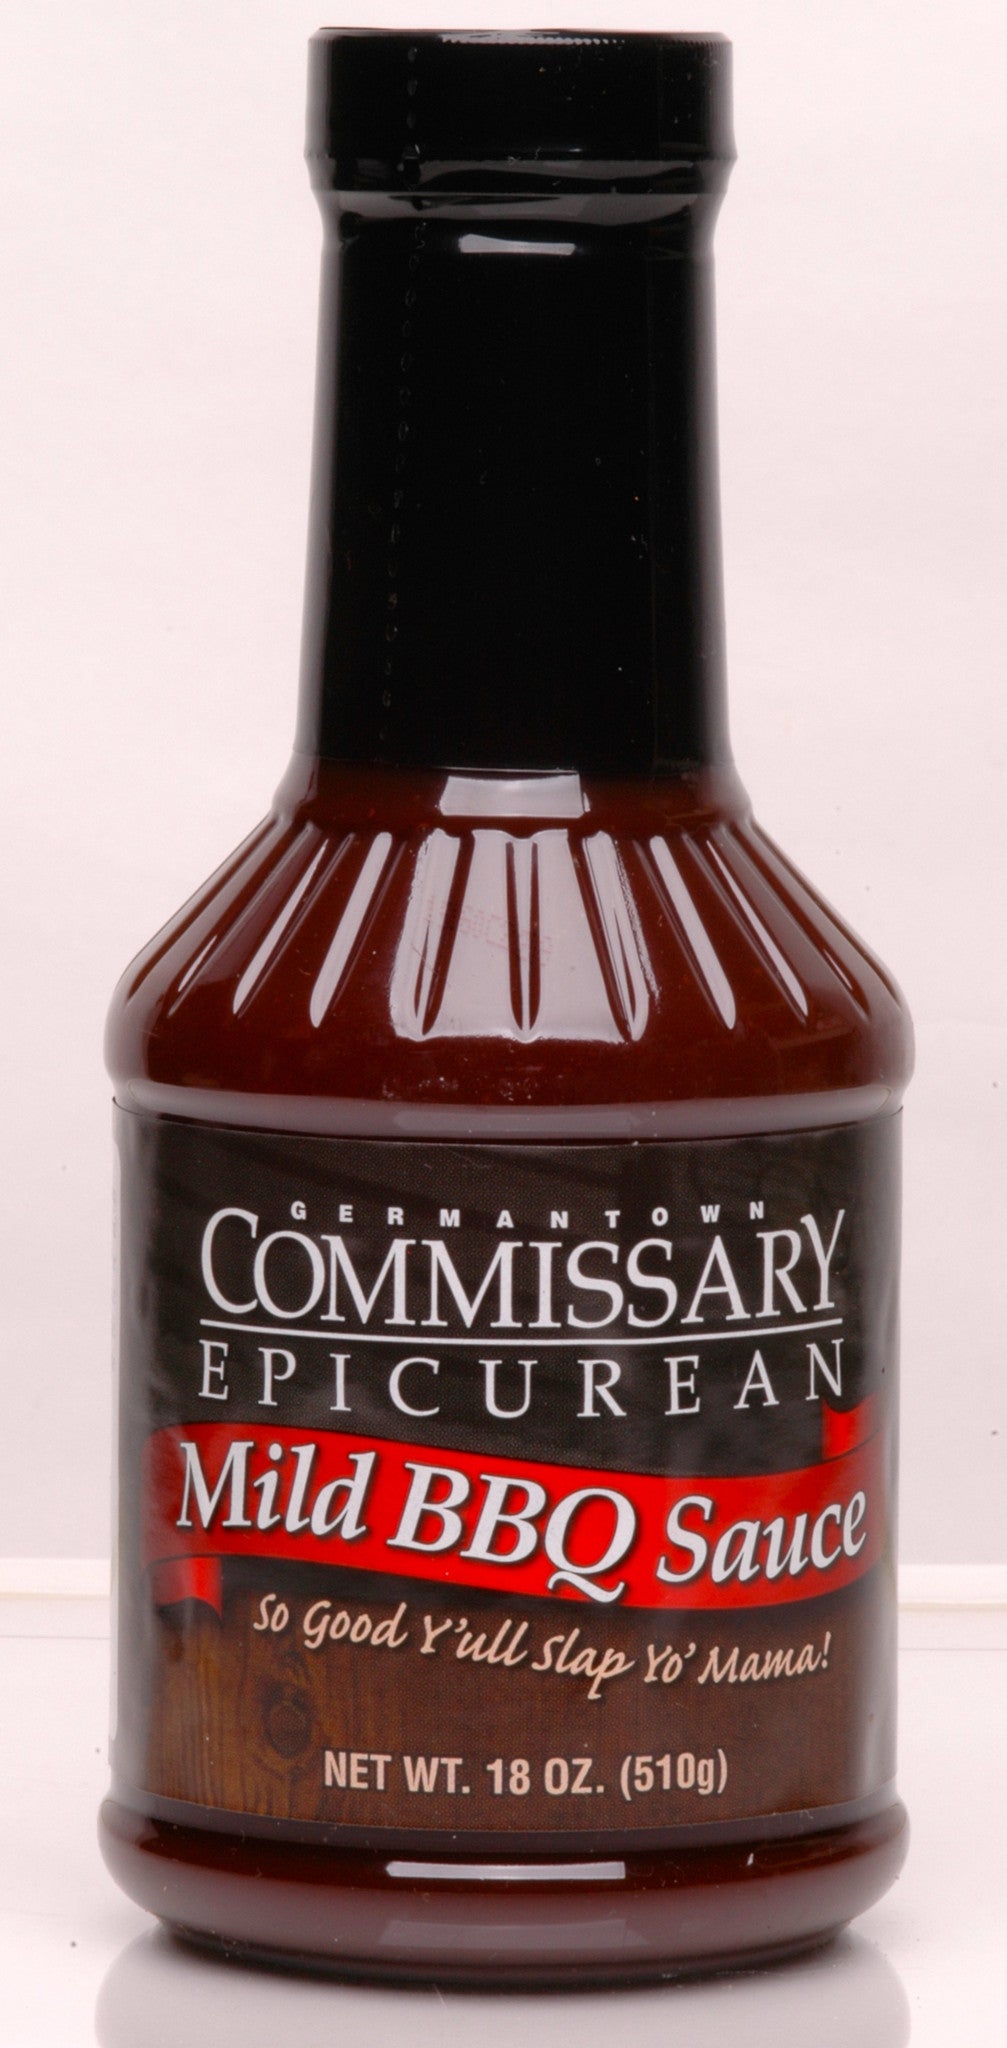 Germantown Commissary Mild BBQ Sauce